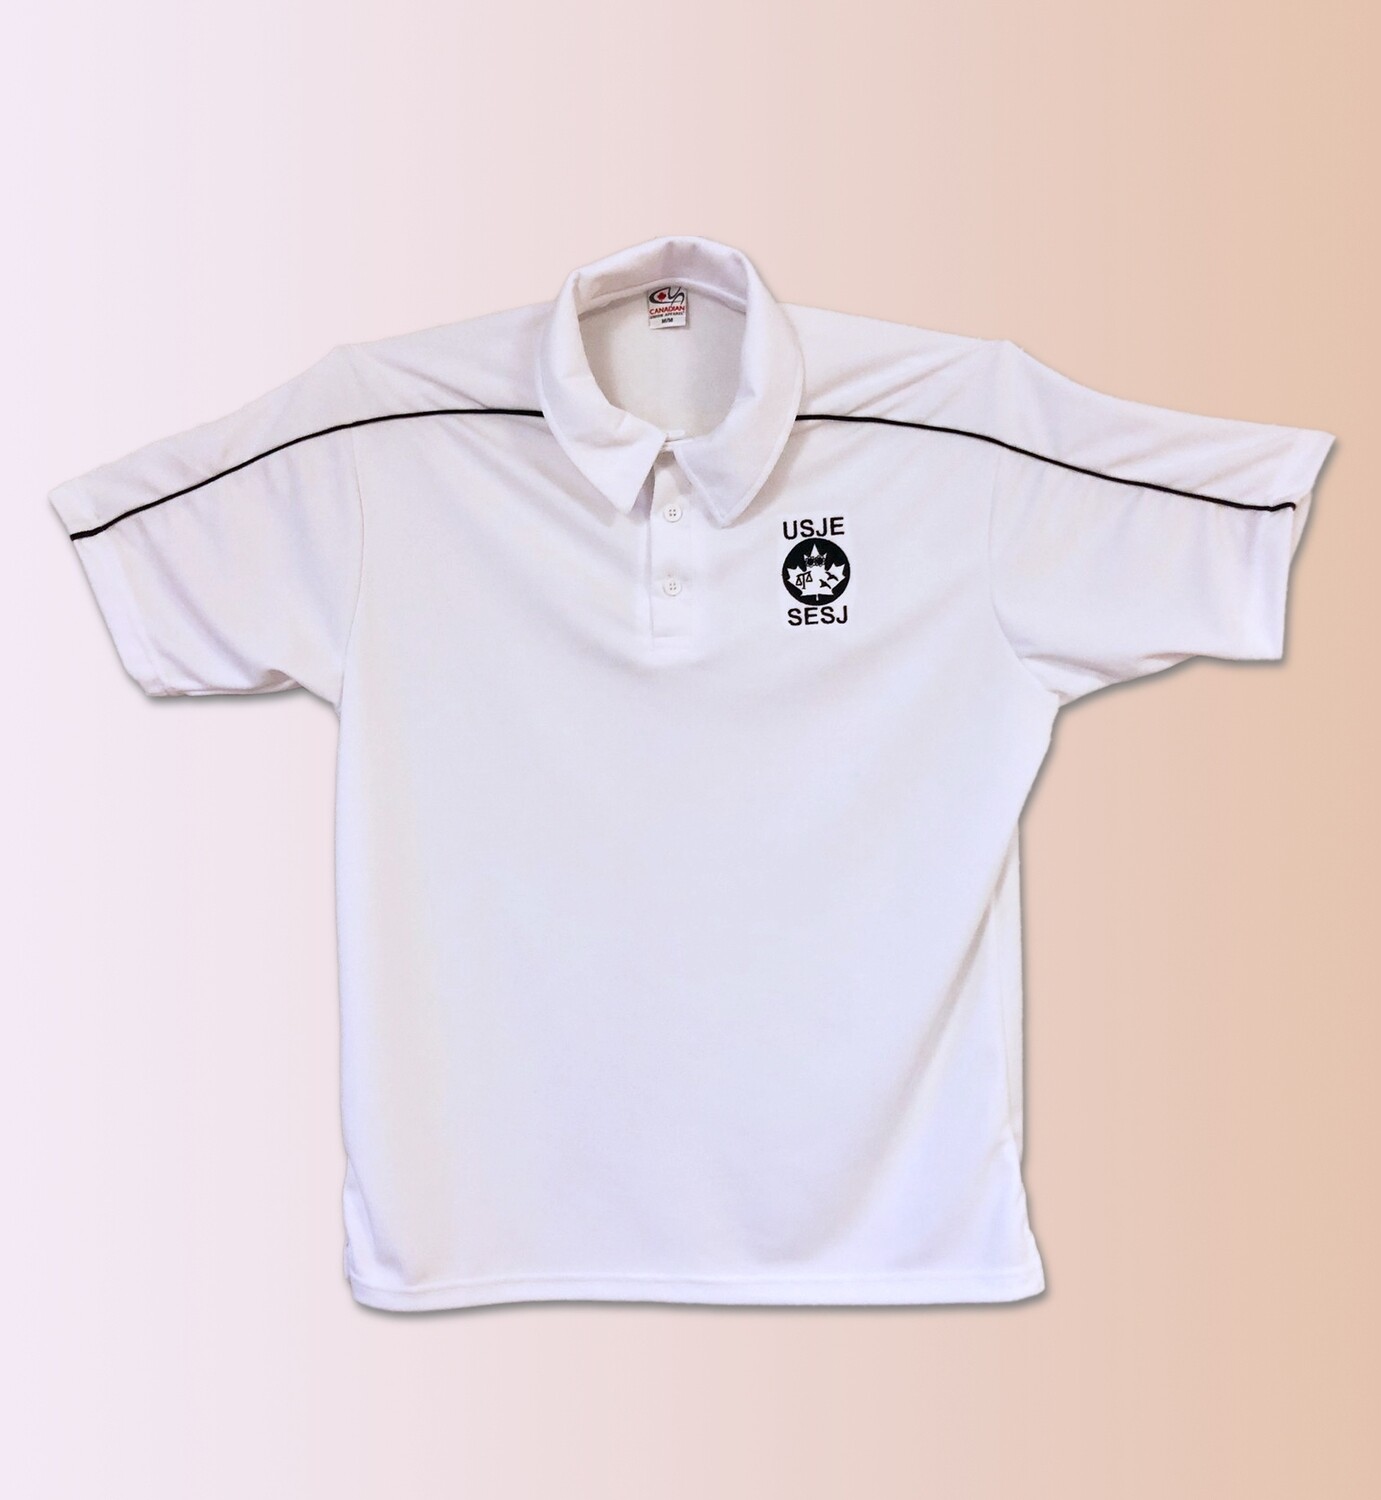 USJE Performance Piqué Polo Shirt (White) (Men) / Polo performance en piqué du SESJ (Blanc) (Homme)